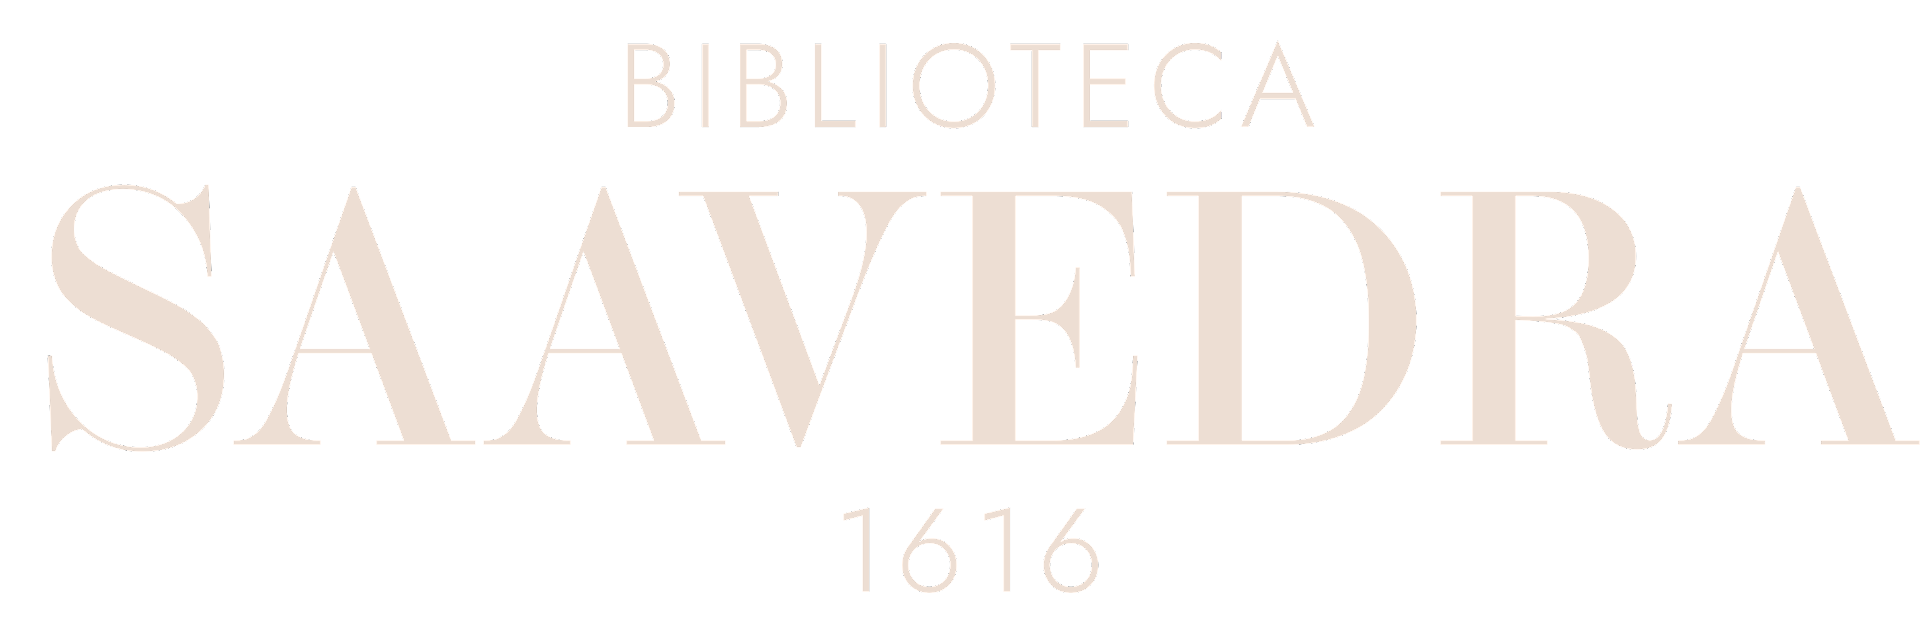 Biblioteca Saavedra